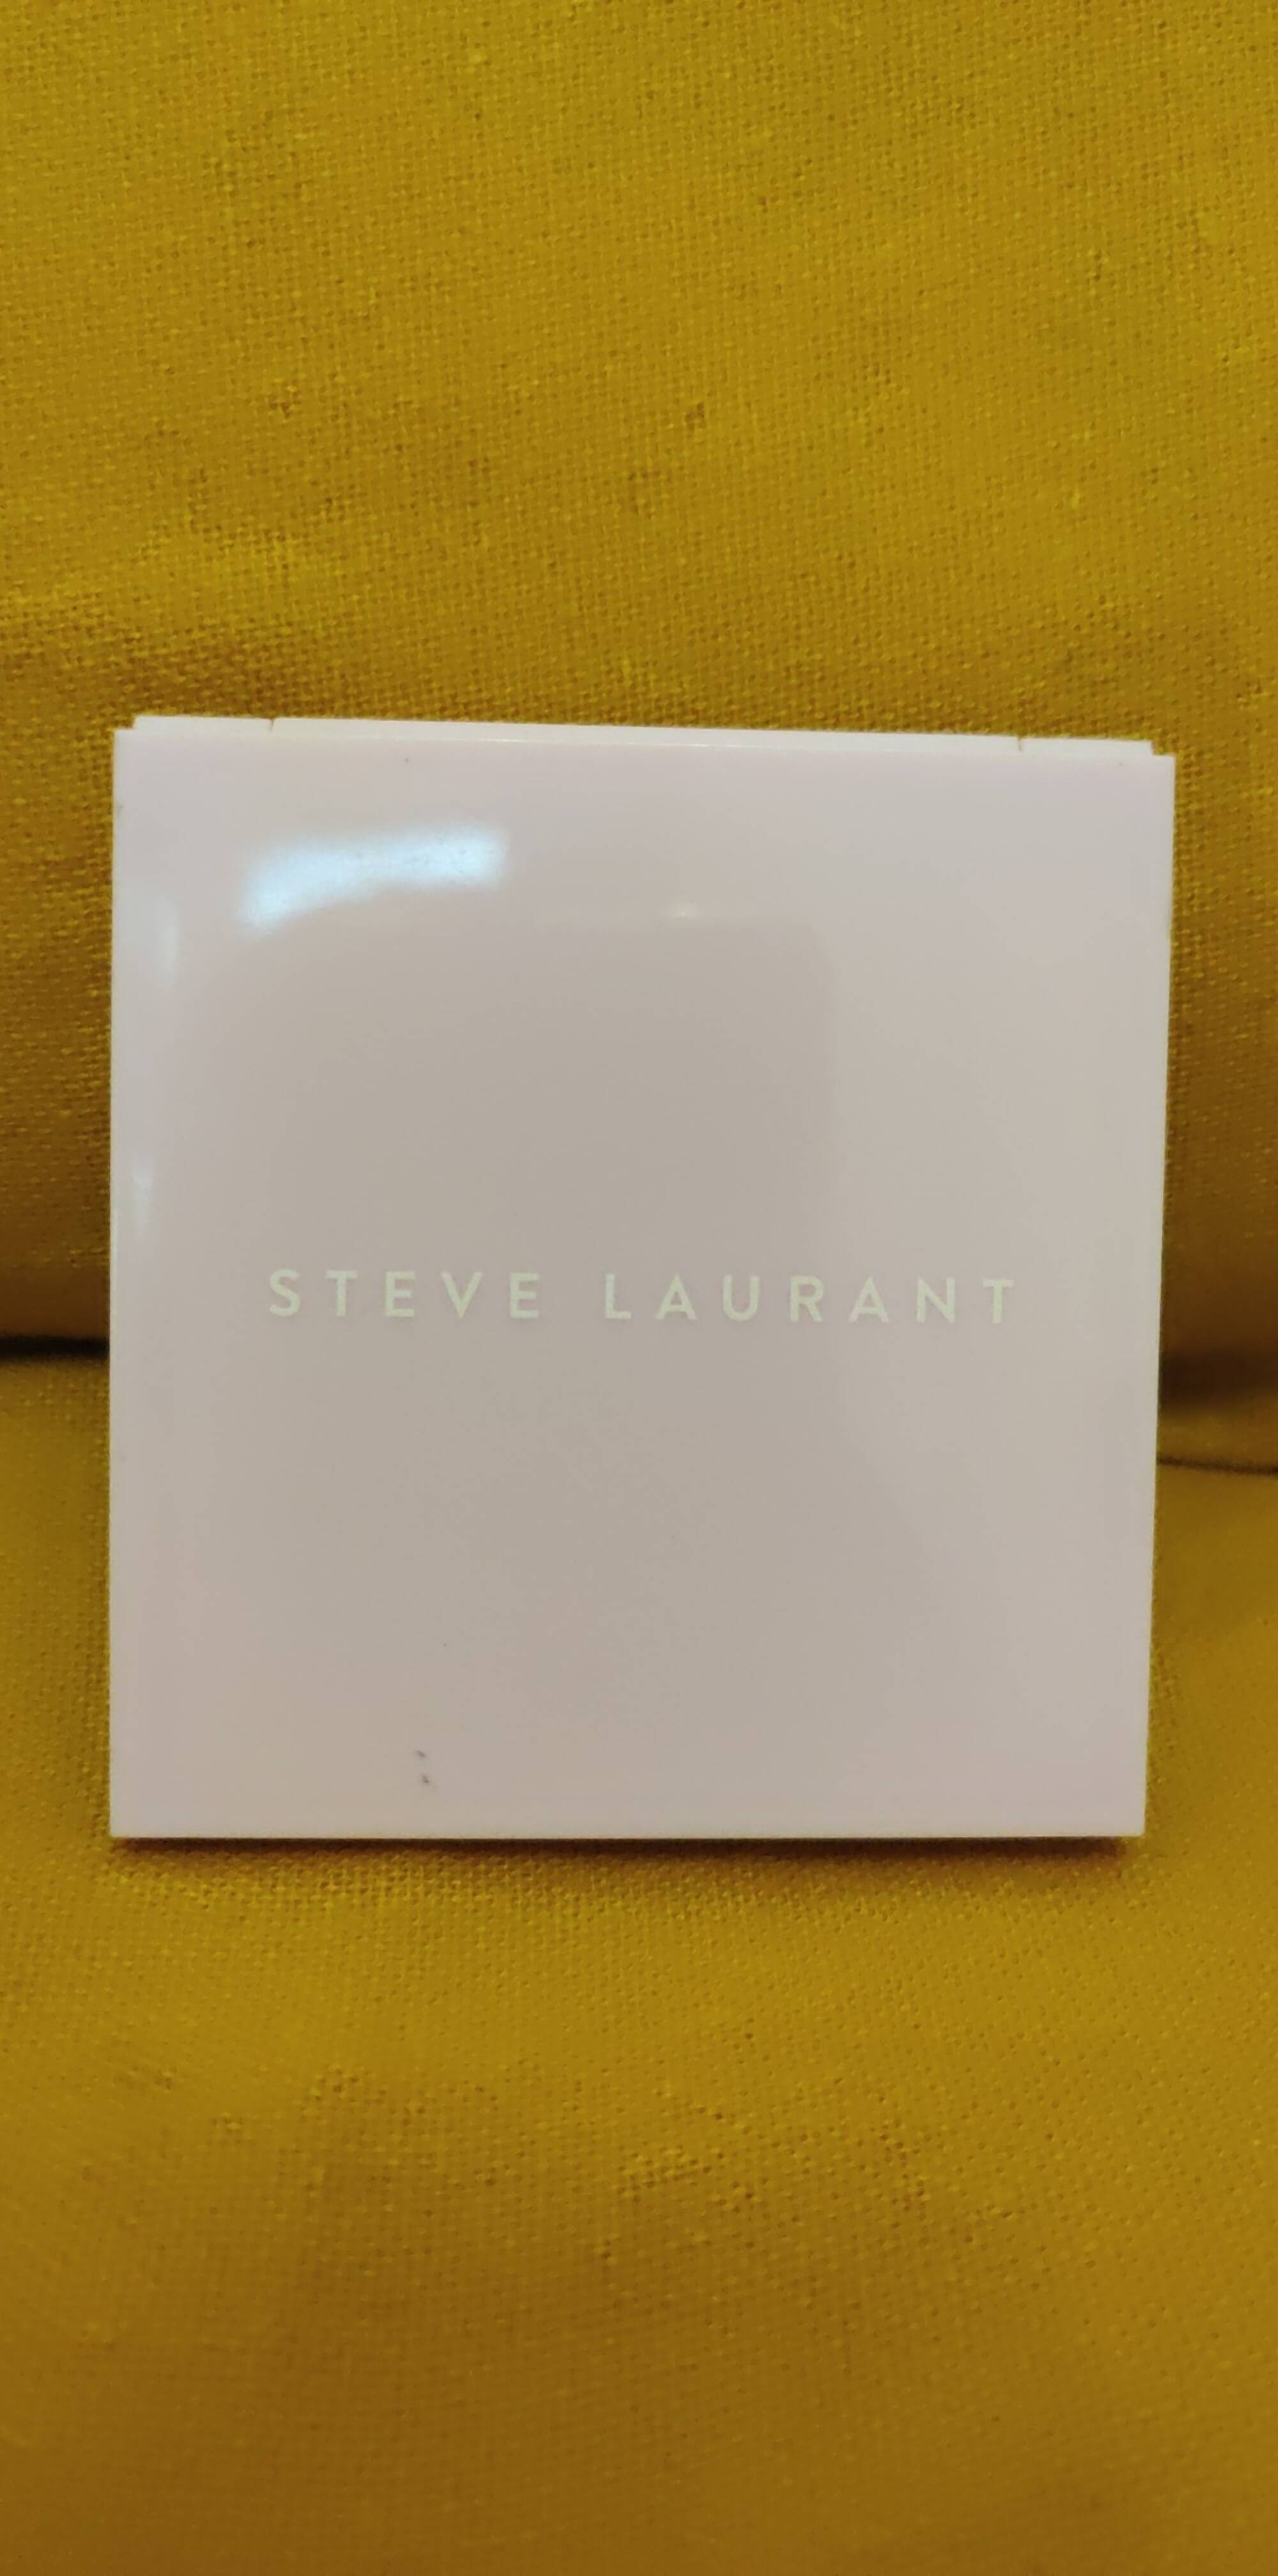 STEVE LAURANT - Birthday edition